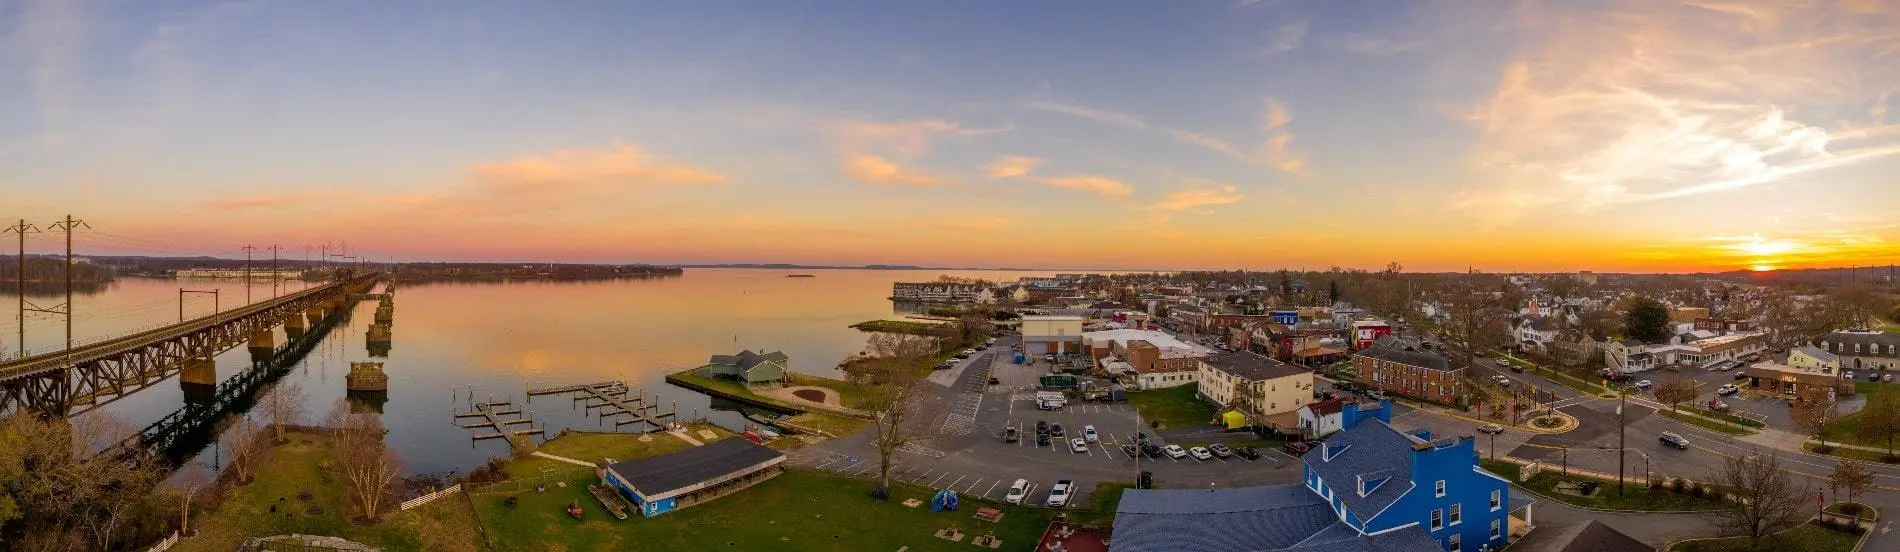 Aerial view of Havre de Grace in Maryland